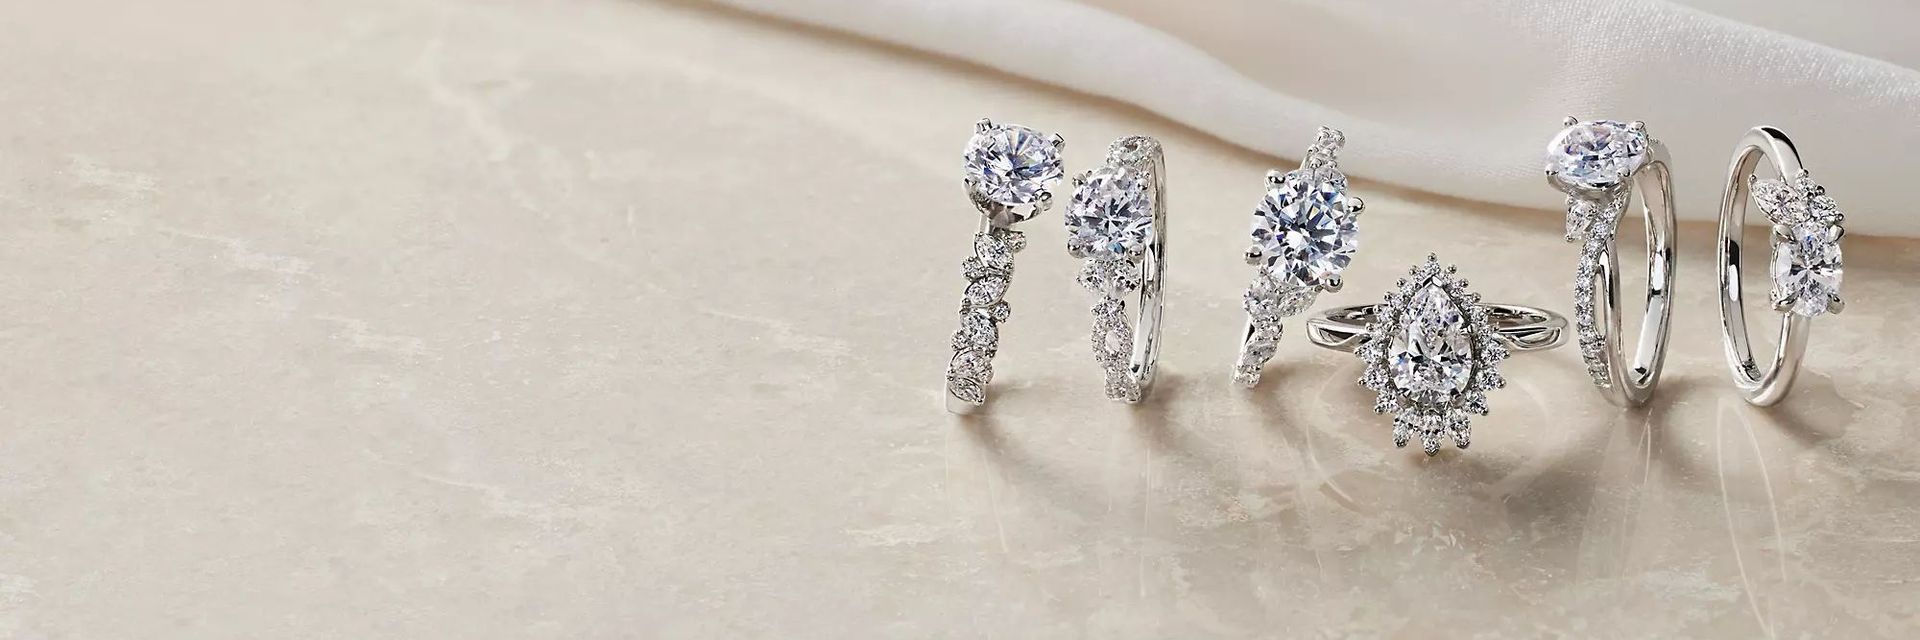 Custom Design Ladies Diamond, Ruby and Emerald Fashion Ring | Don Basch  Jewelers